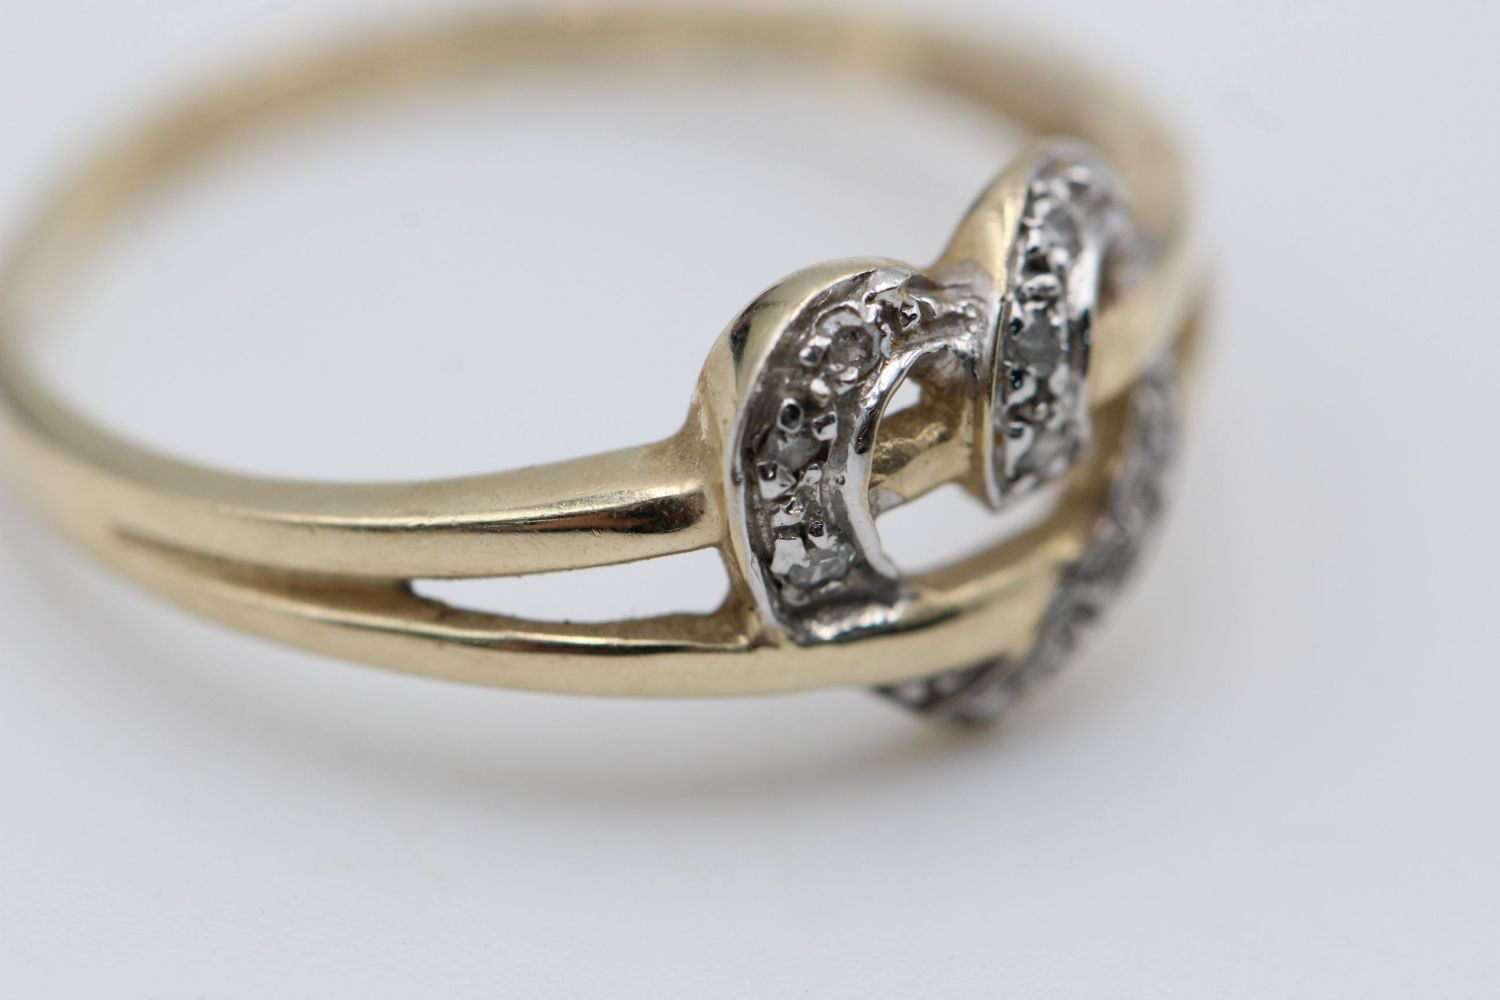 9ct Gold diamond detail heart ring 1.9 grams gross - Image 5 of 5